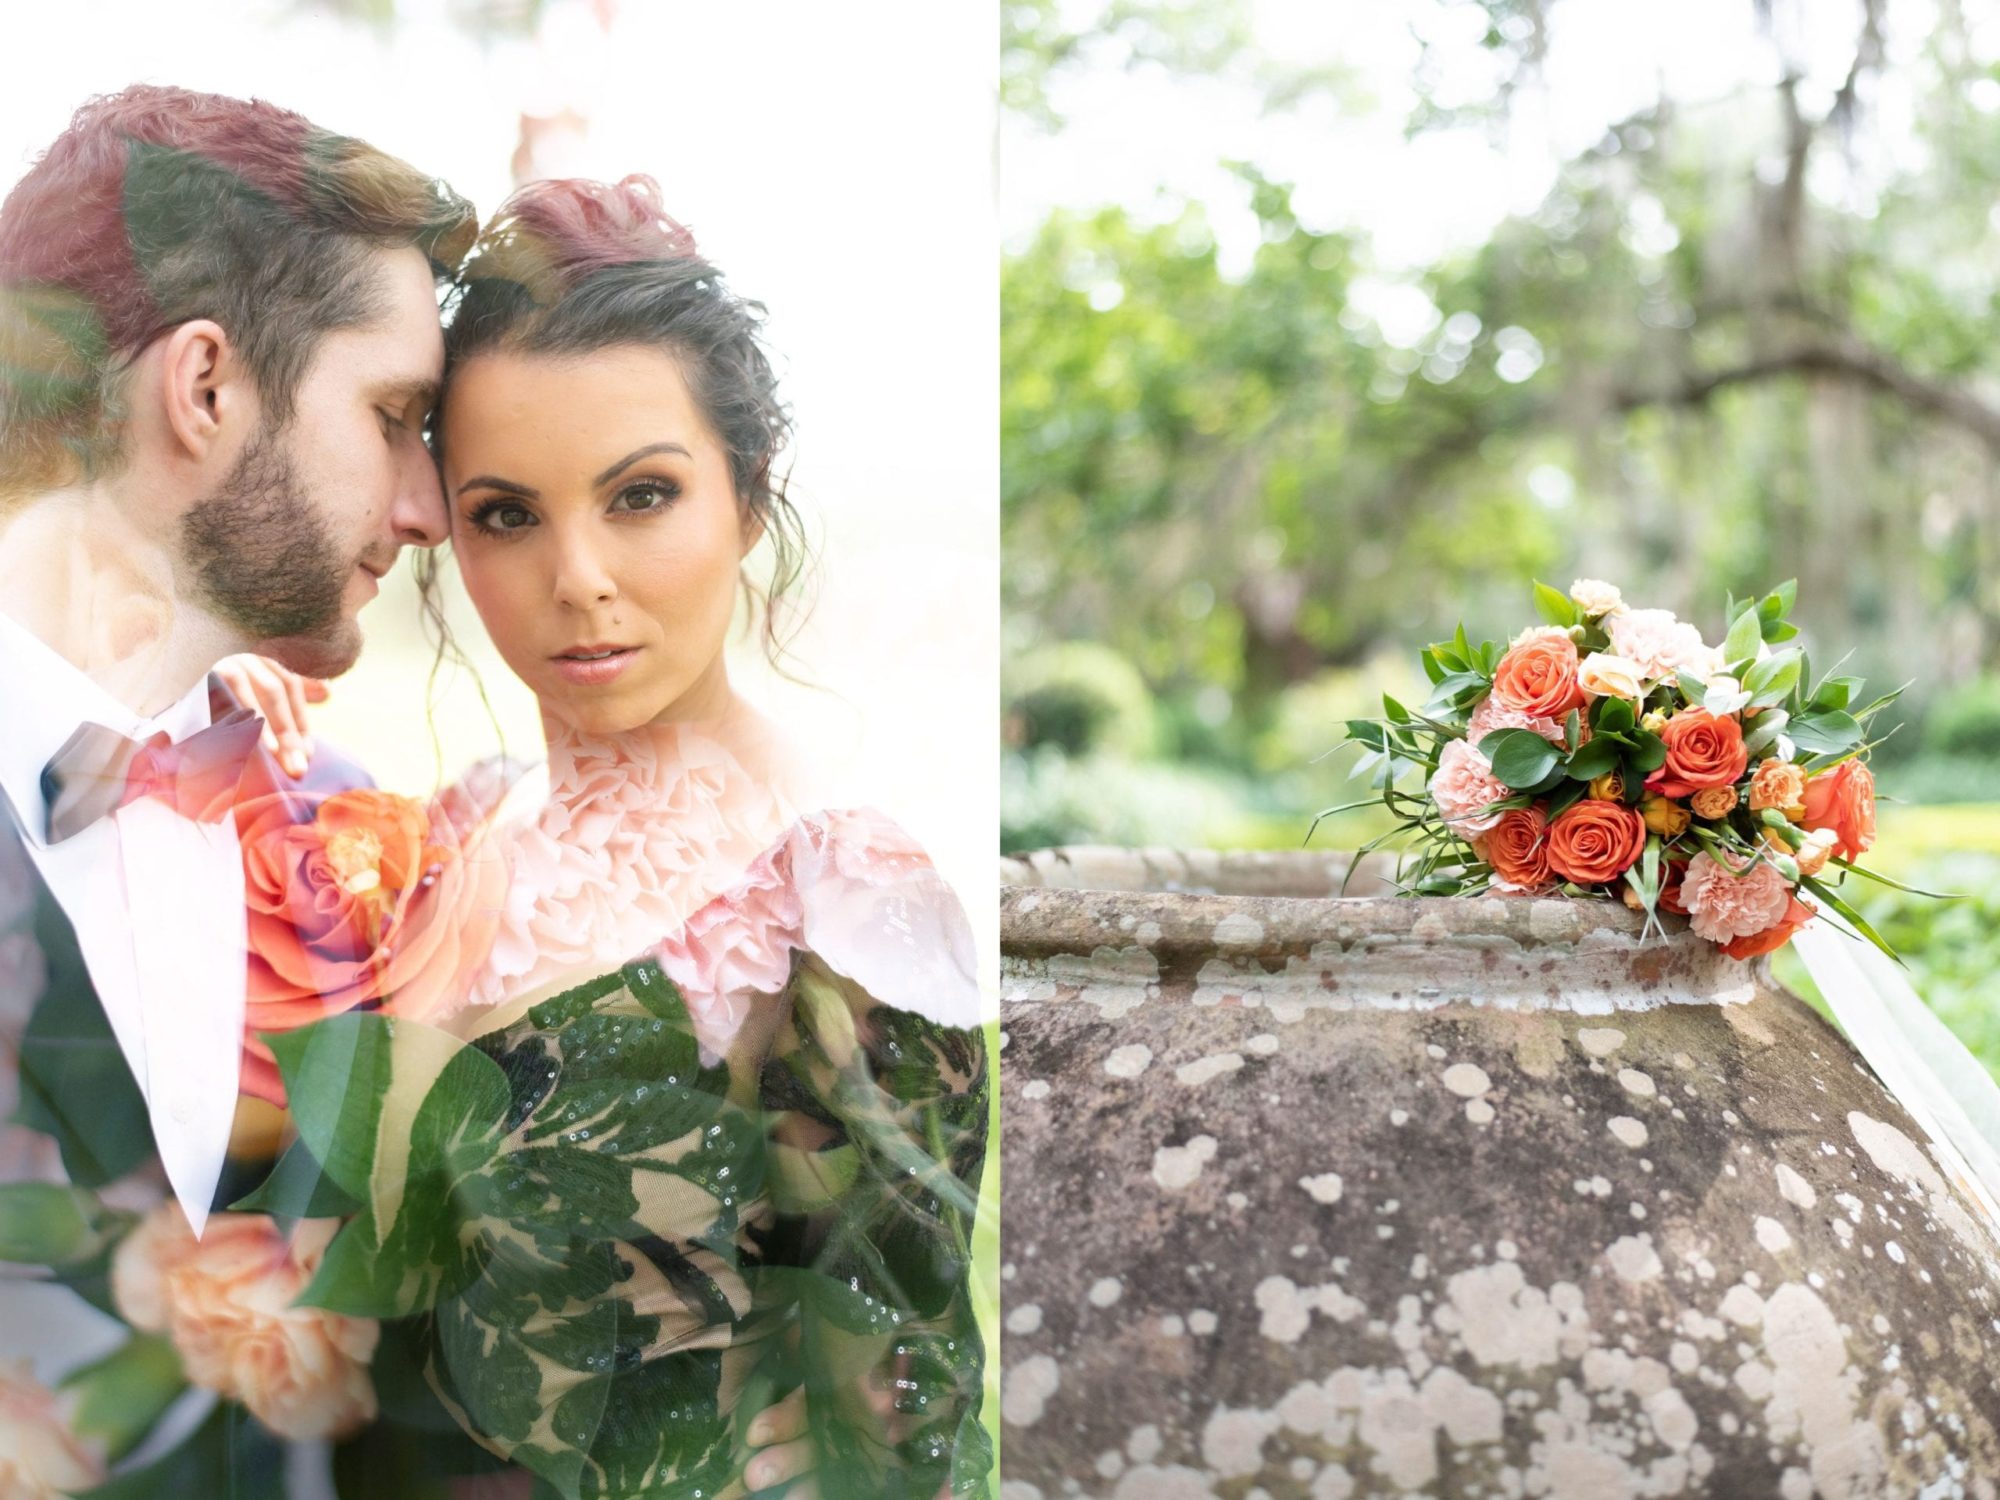 Tampa wedding summer orange and pastel colors bouquet double exposure portrait of couple